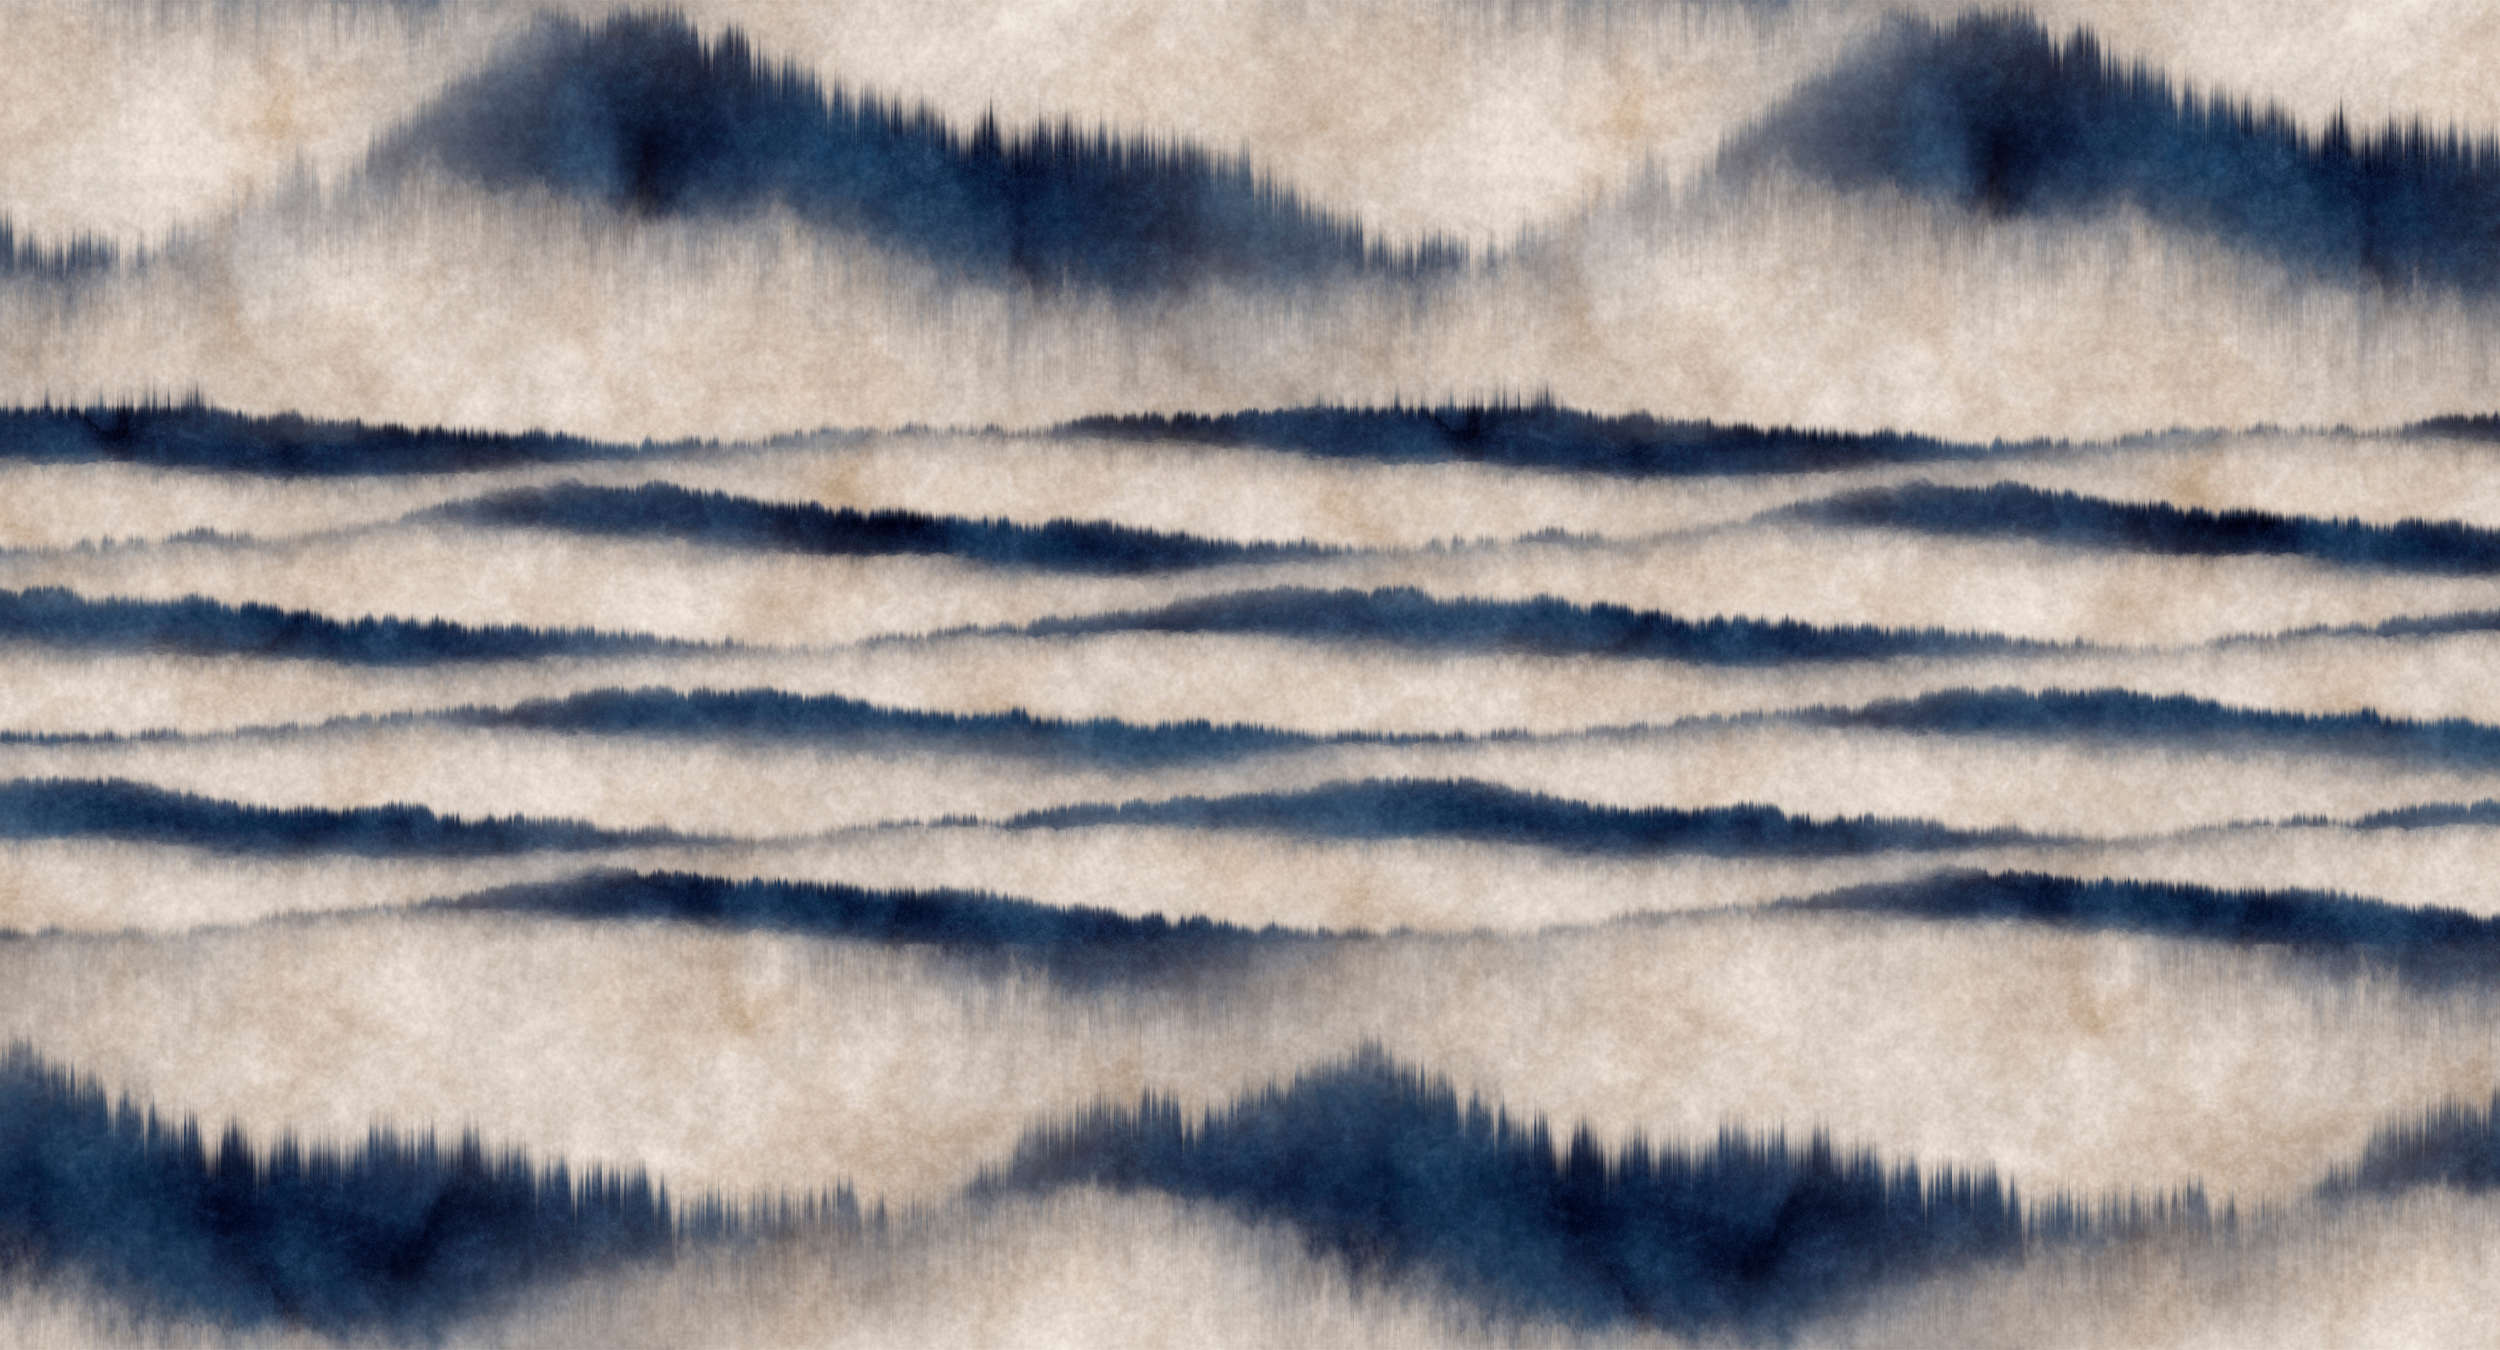             Fototapete abstraktes Muster Wellen – Blau, Weiß
        